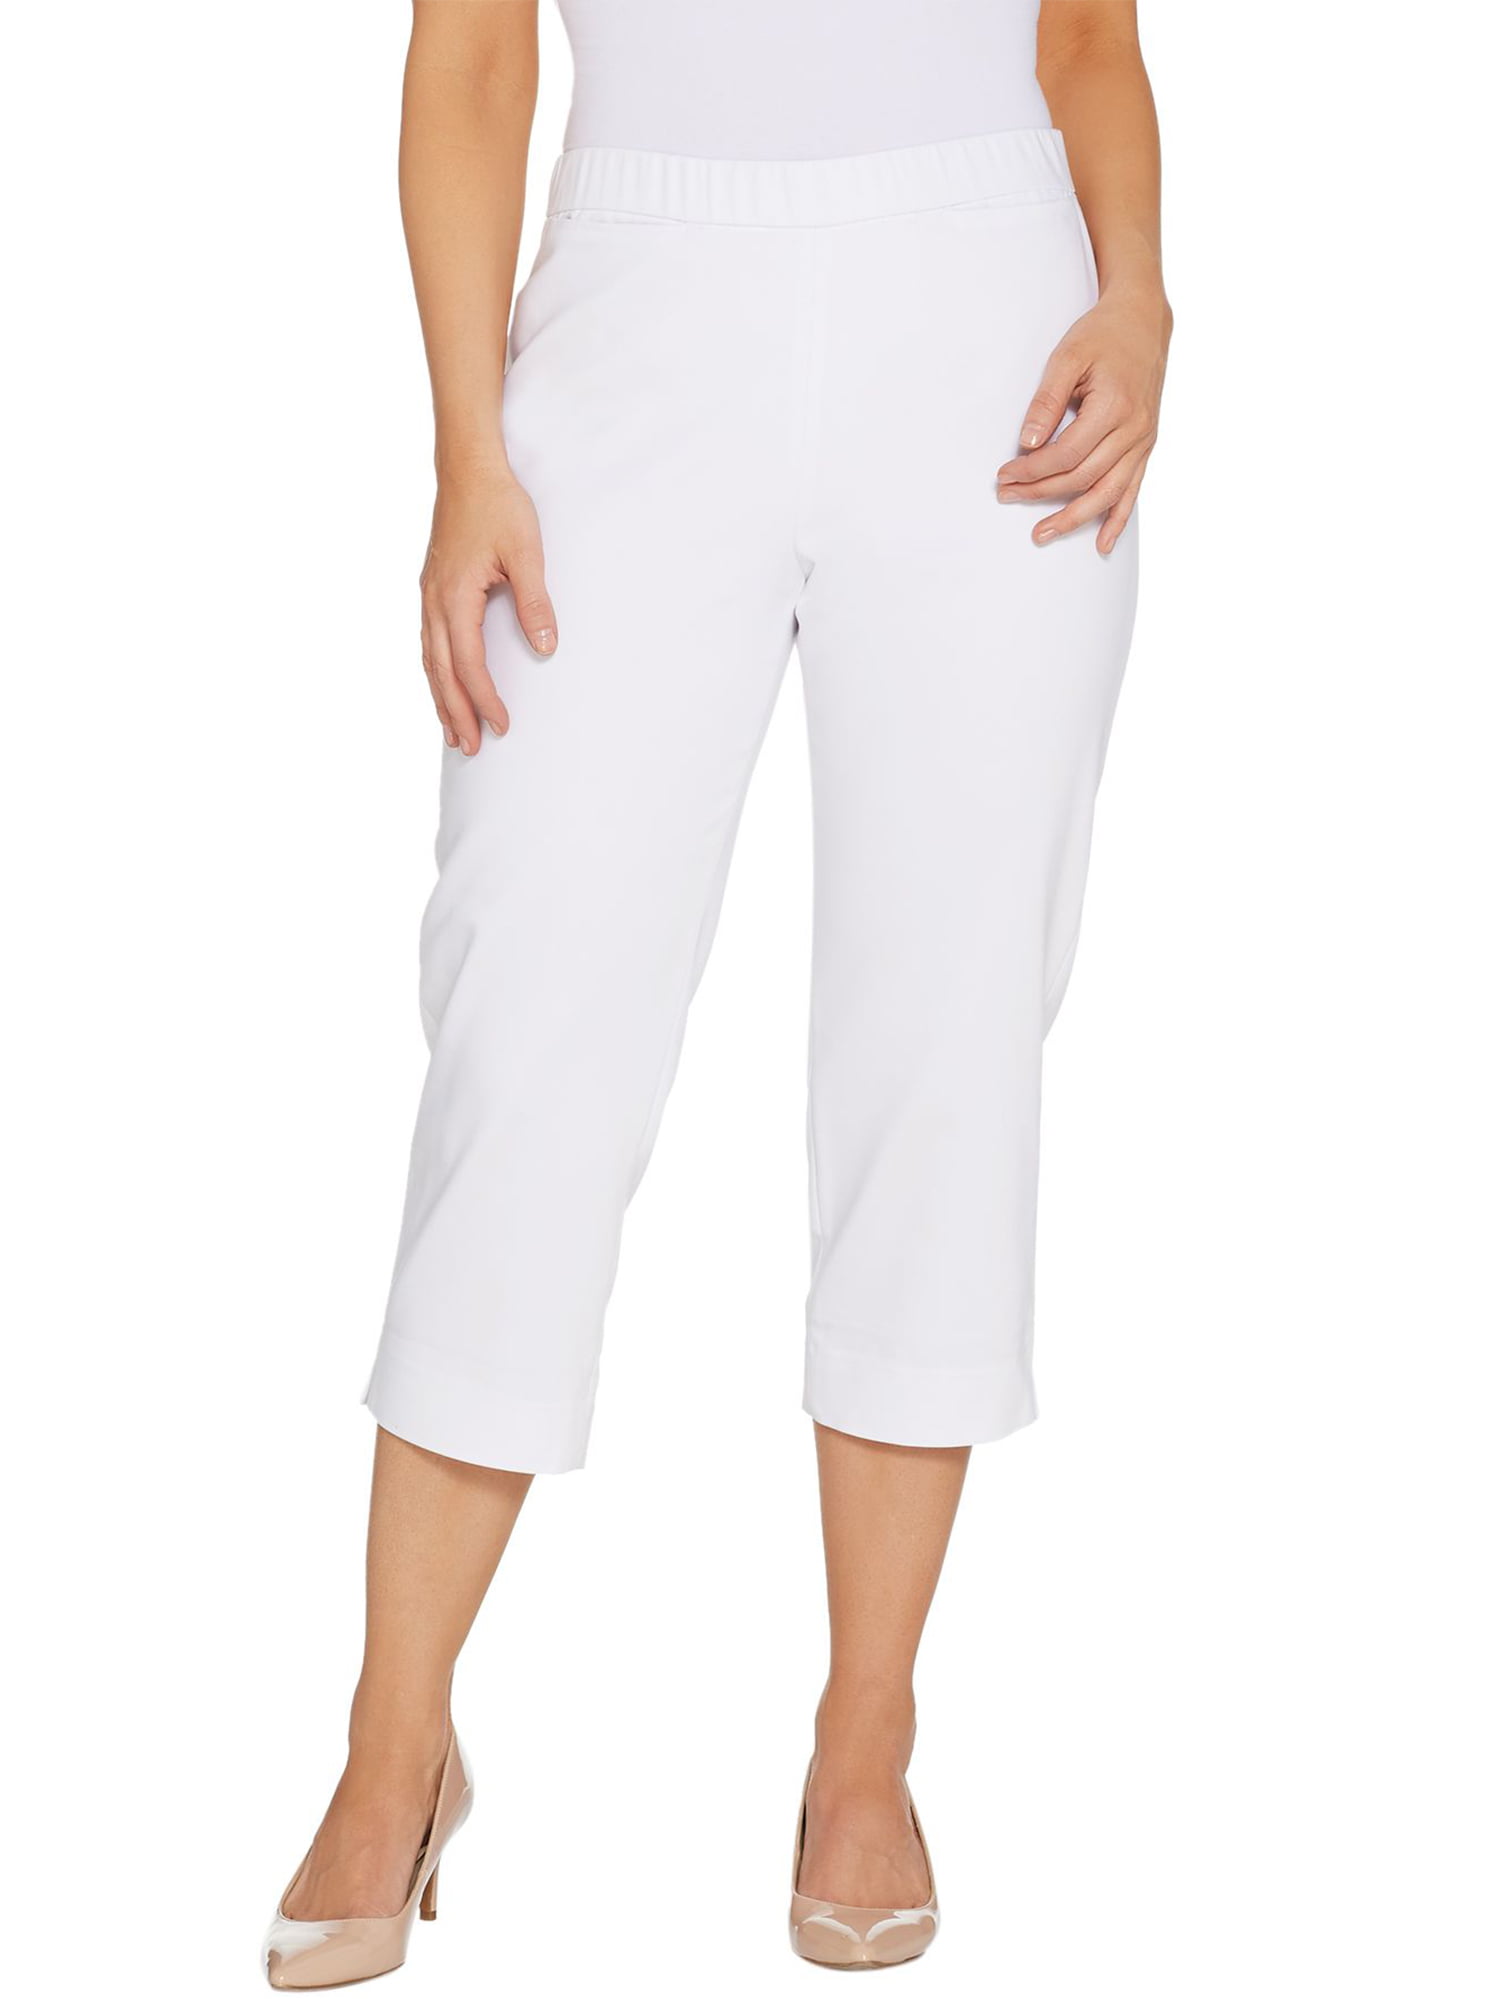 DENNIS BASSO Size 12 Double Weave Pull-On Capri Pants WHITE - Walmart ...